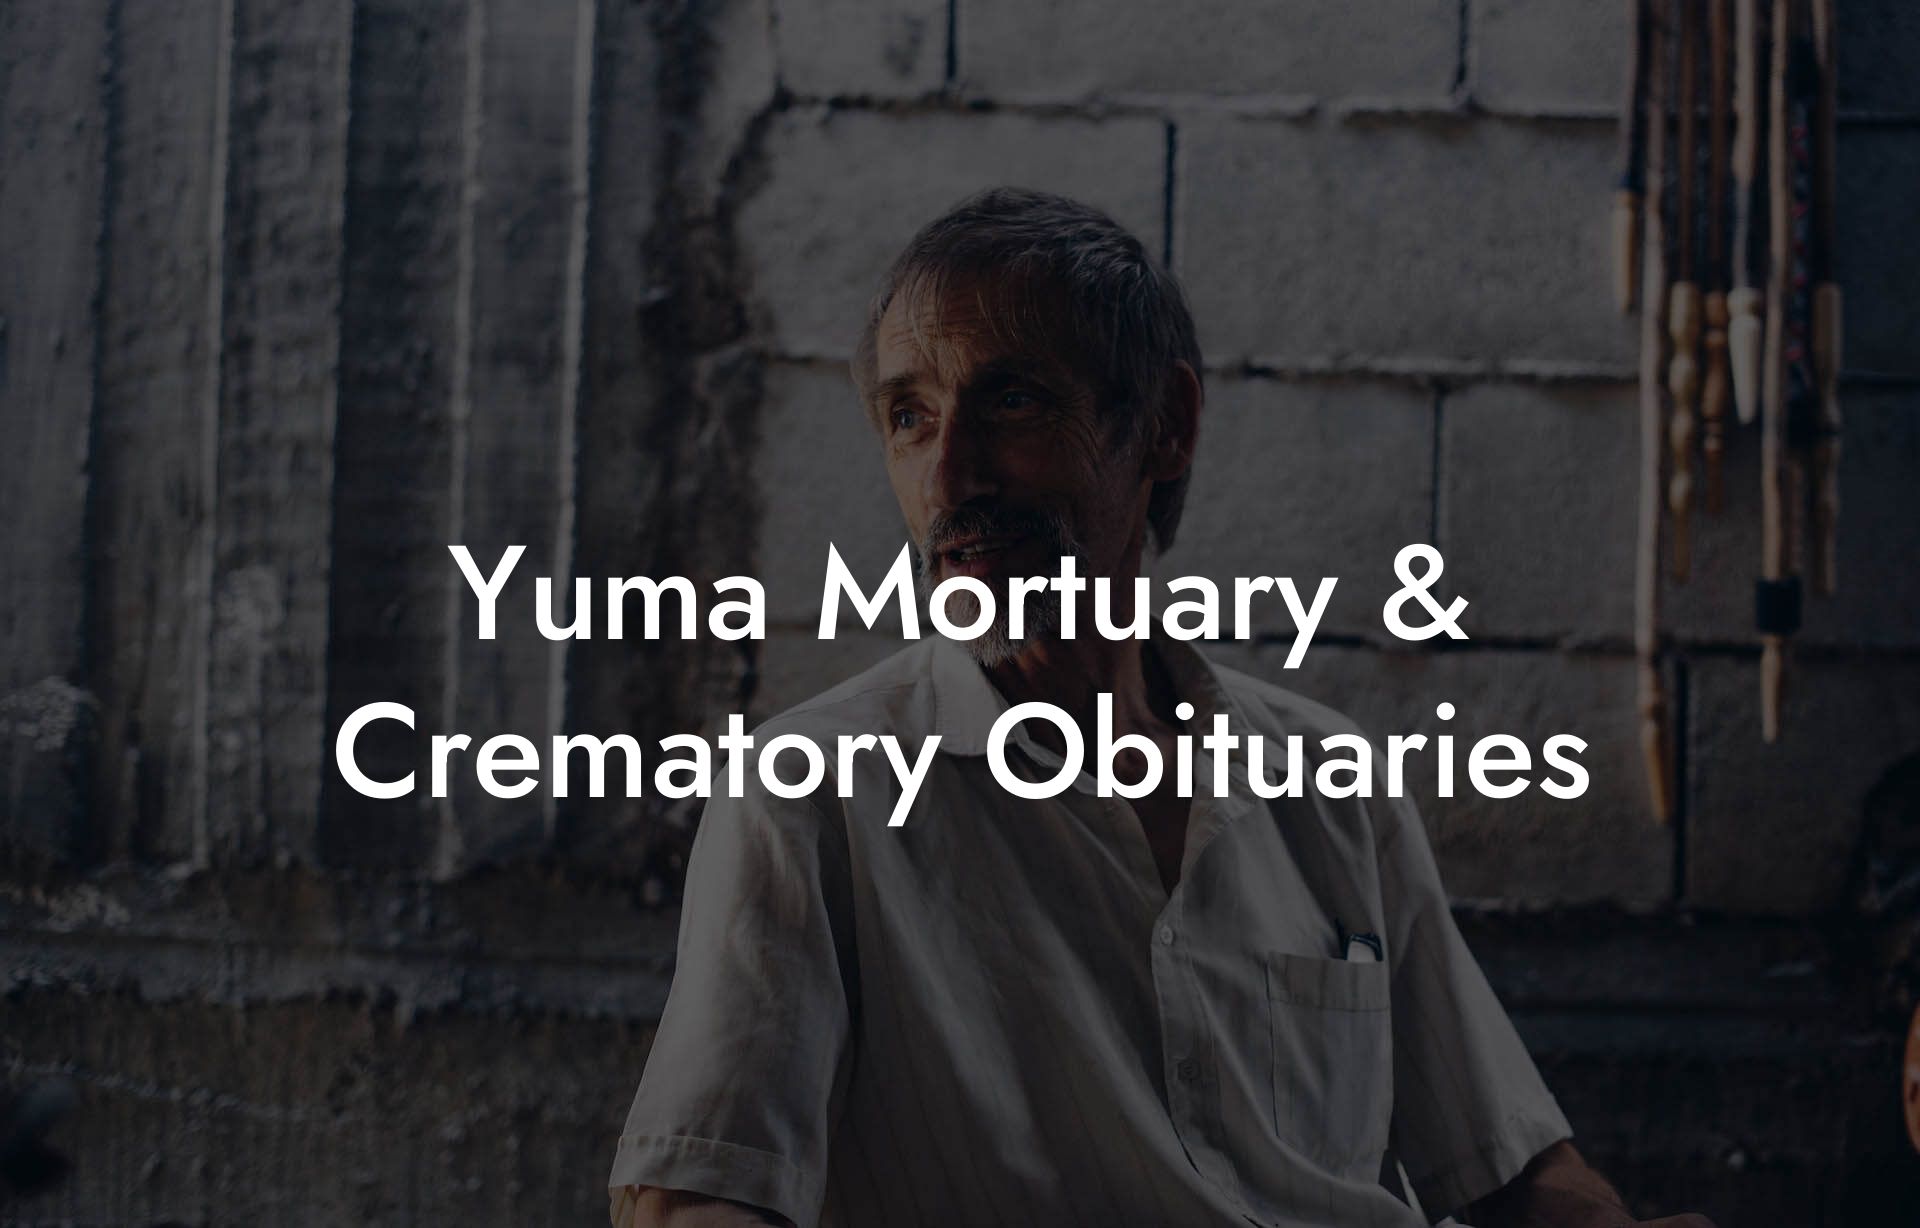 Yuma Mortuary & Crematory Obituaries